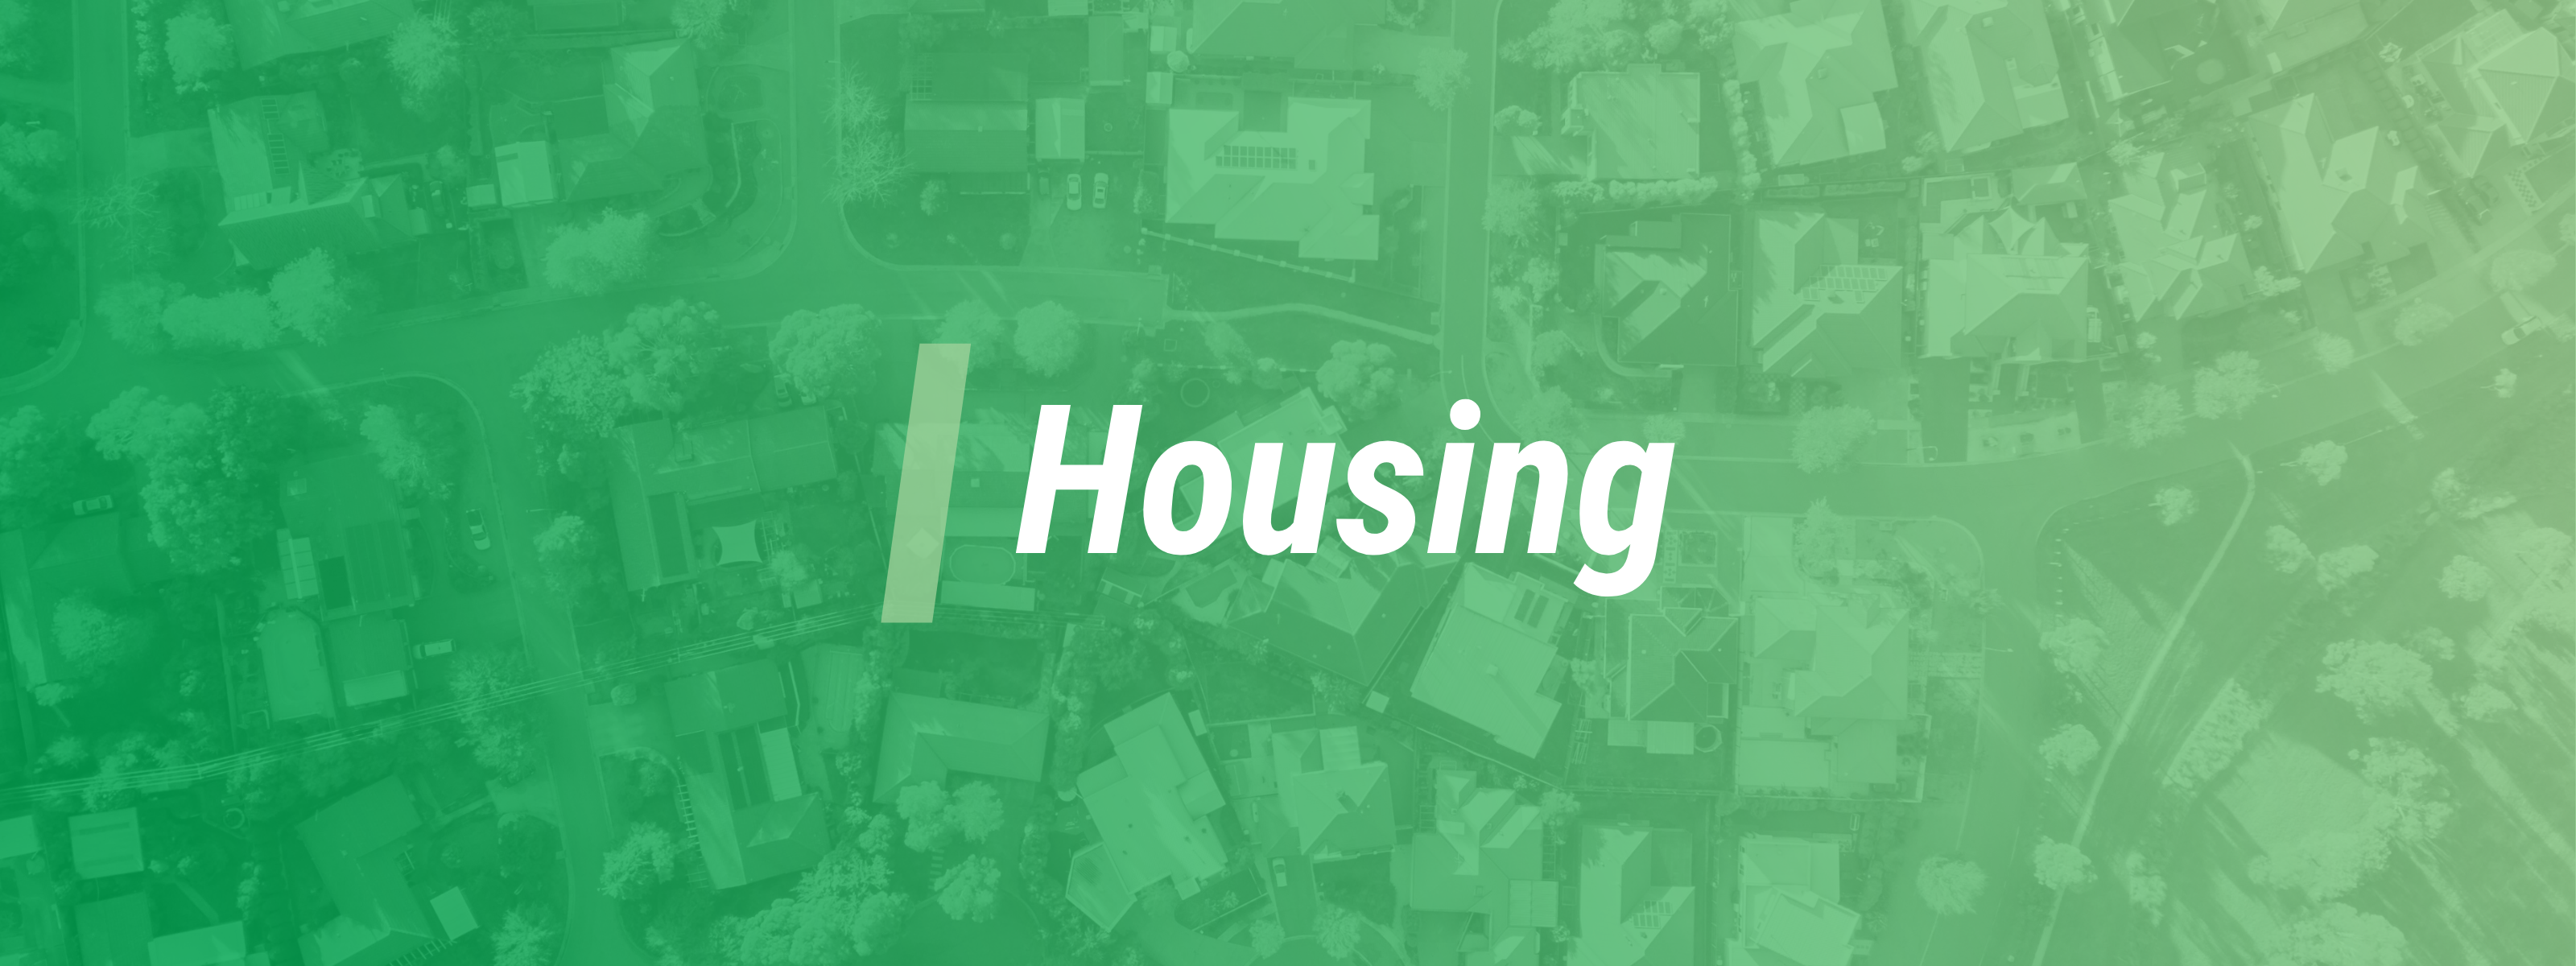 'Housing'